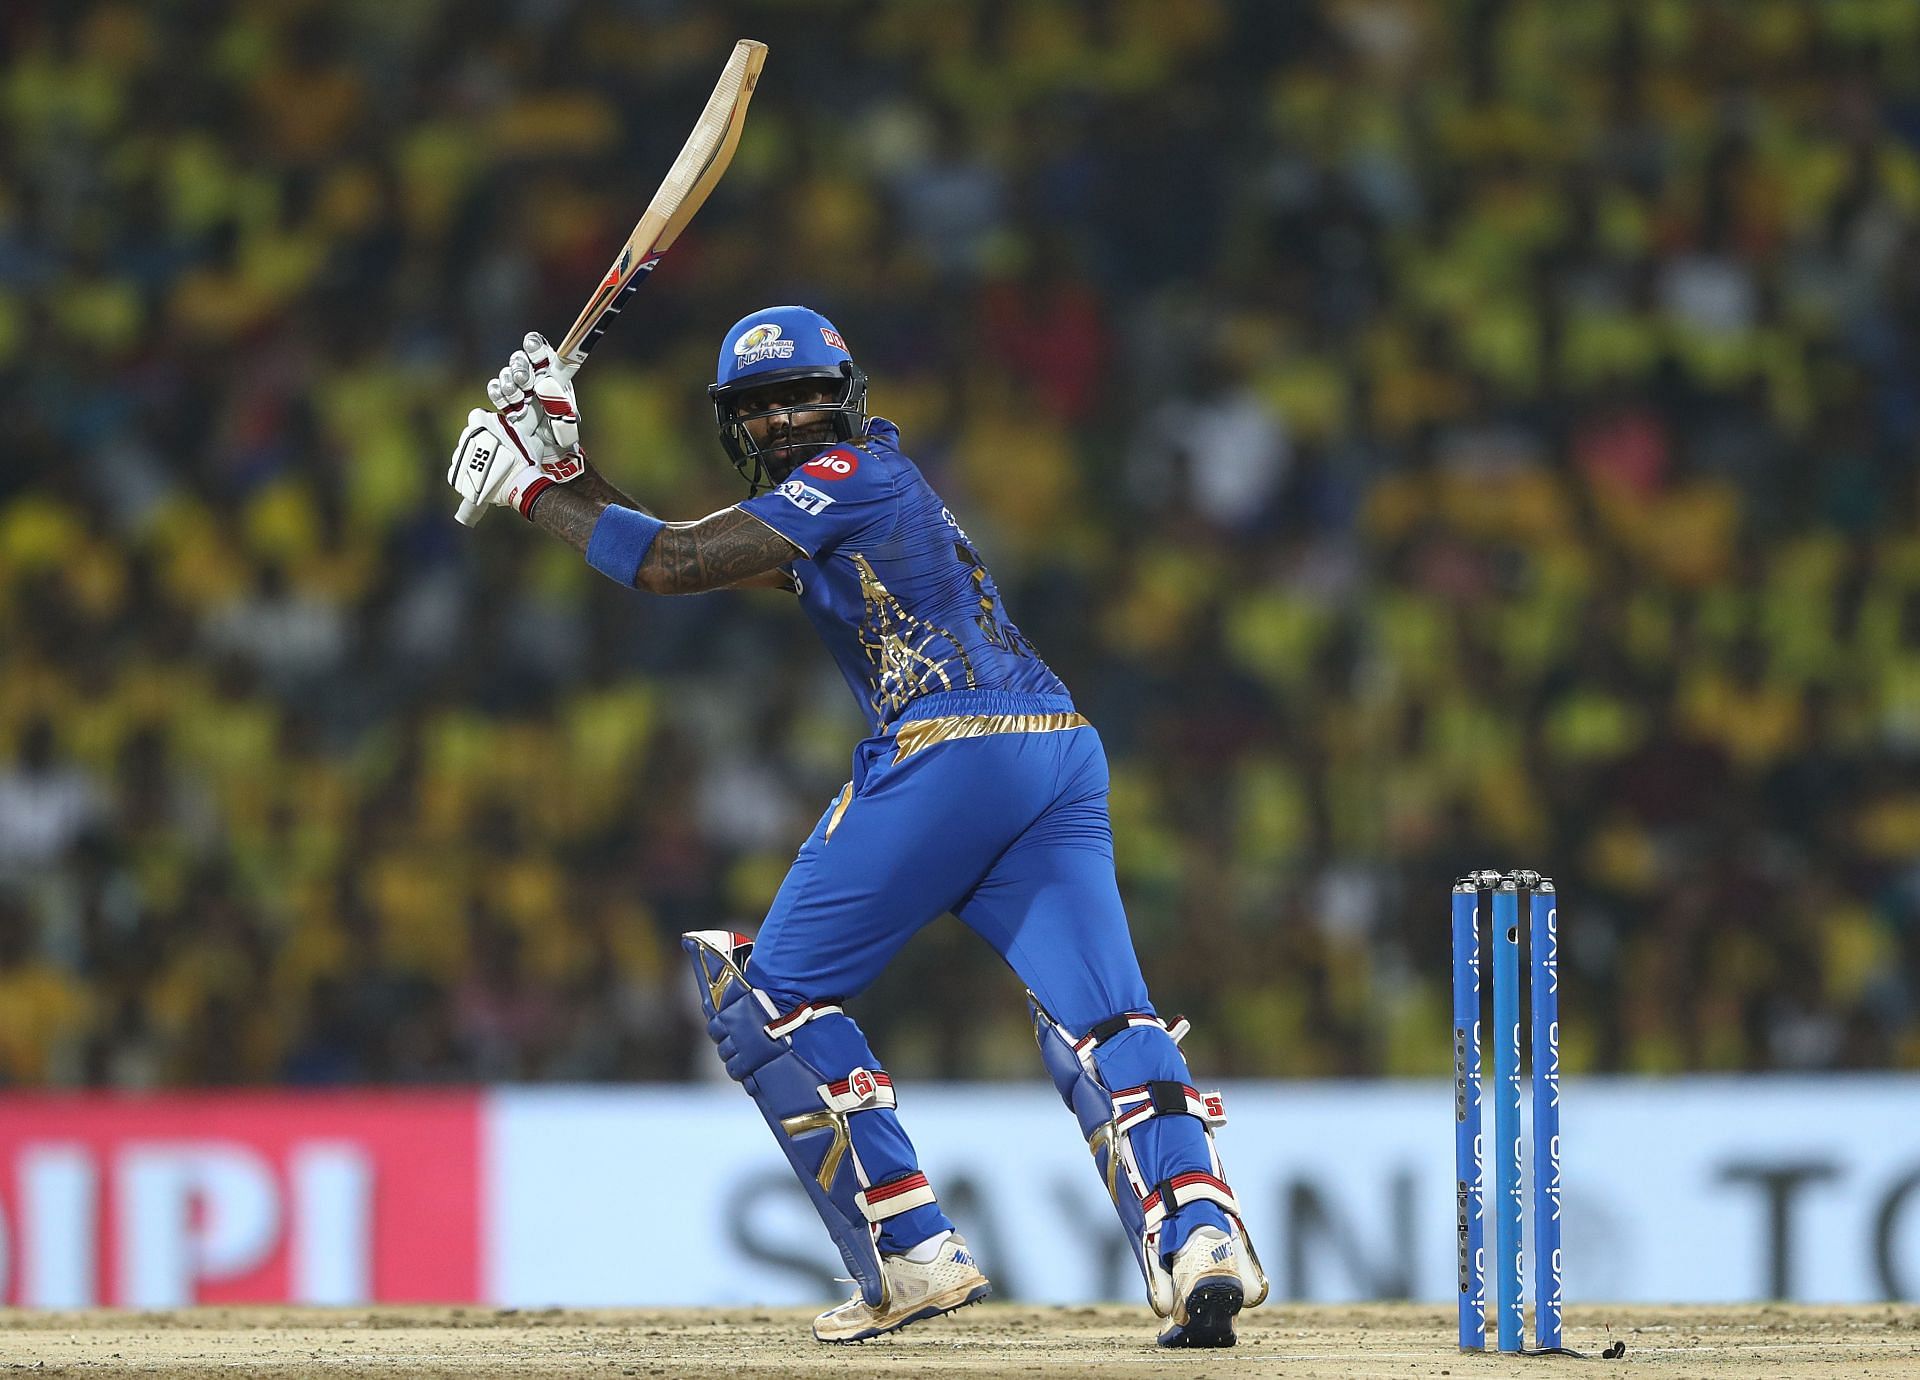 Suryakumar Yadav batting in the IPL. Pic: Getty Images